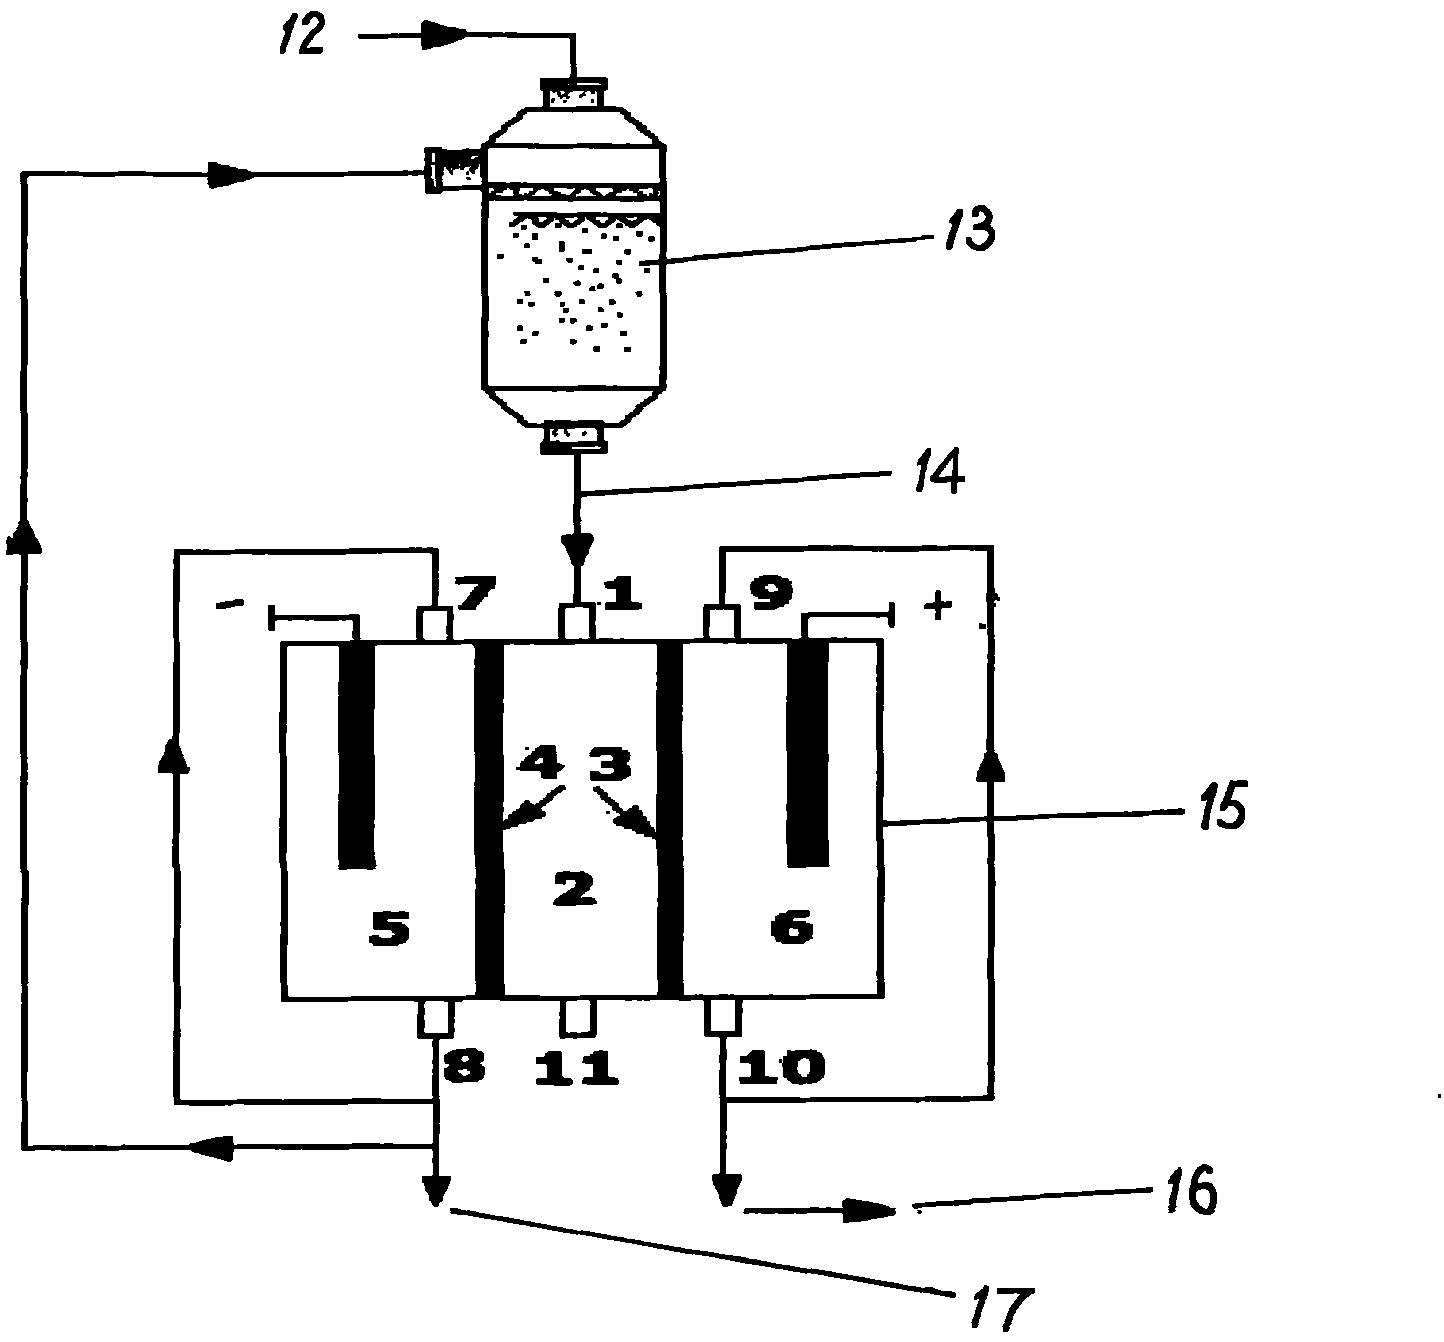 Electrolysis circulating flue gas desulfurization method utilizing reclamation semidry method